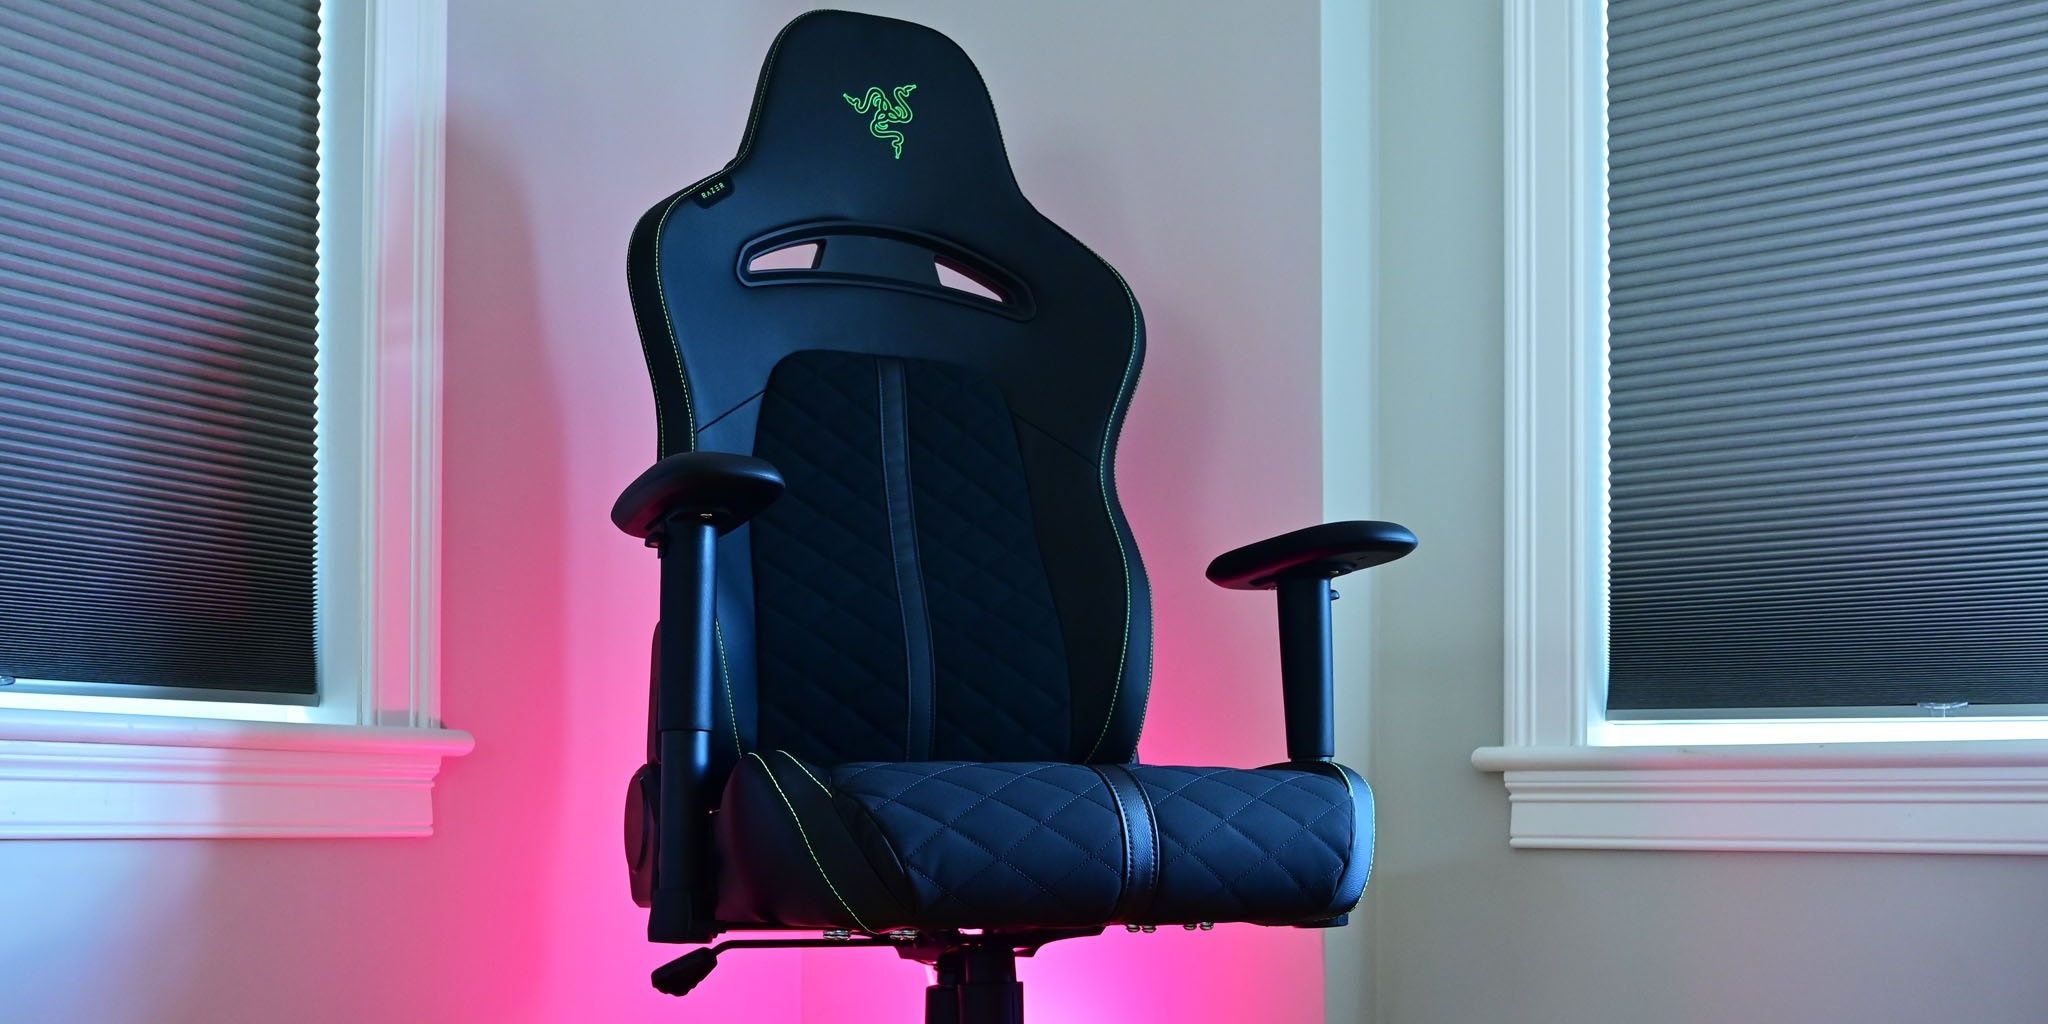 razer gaming chair